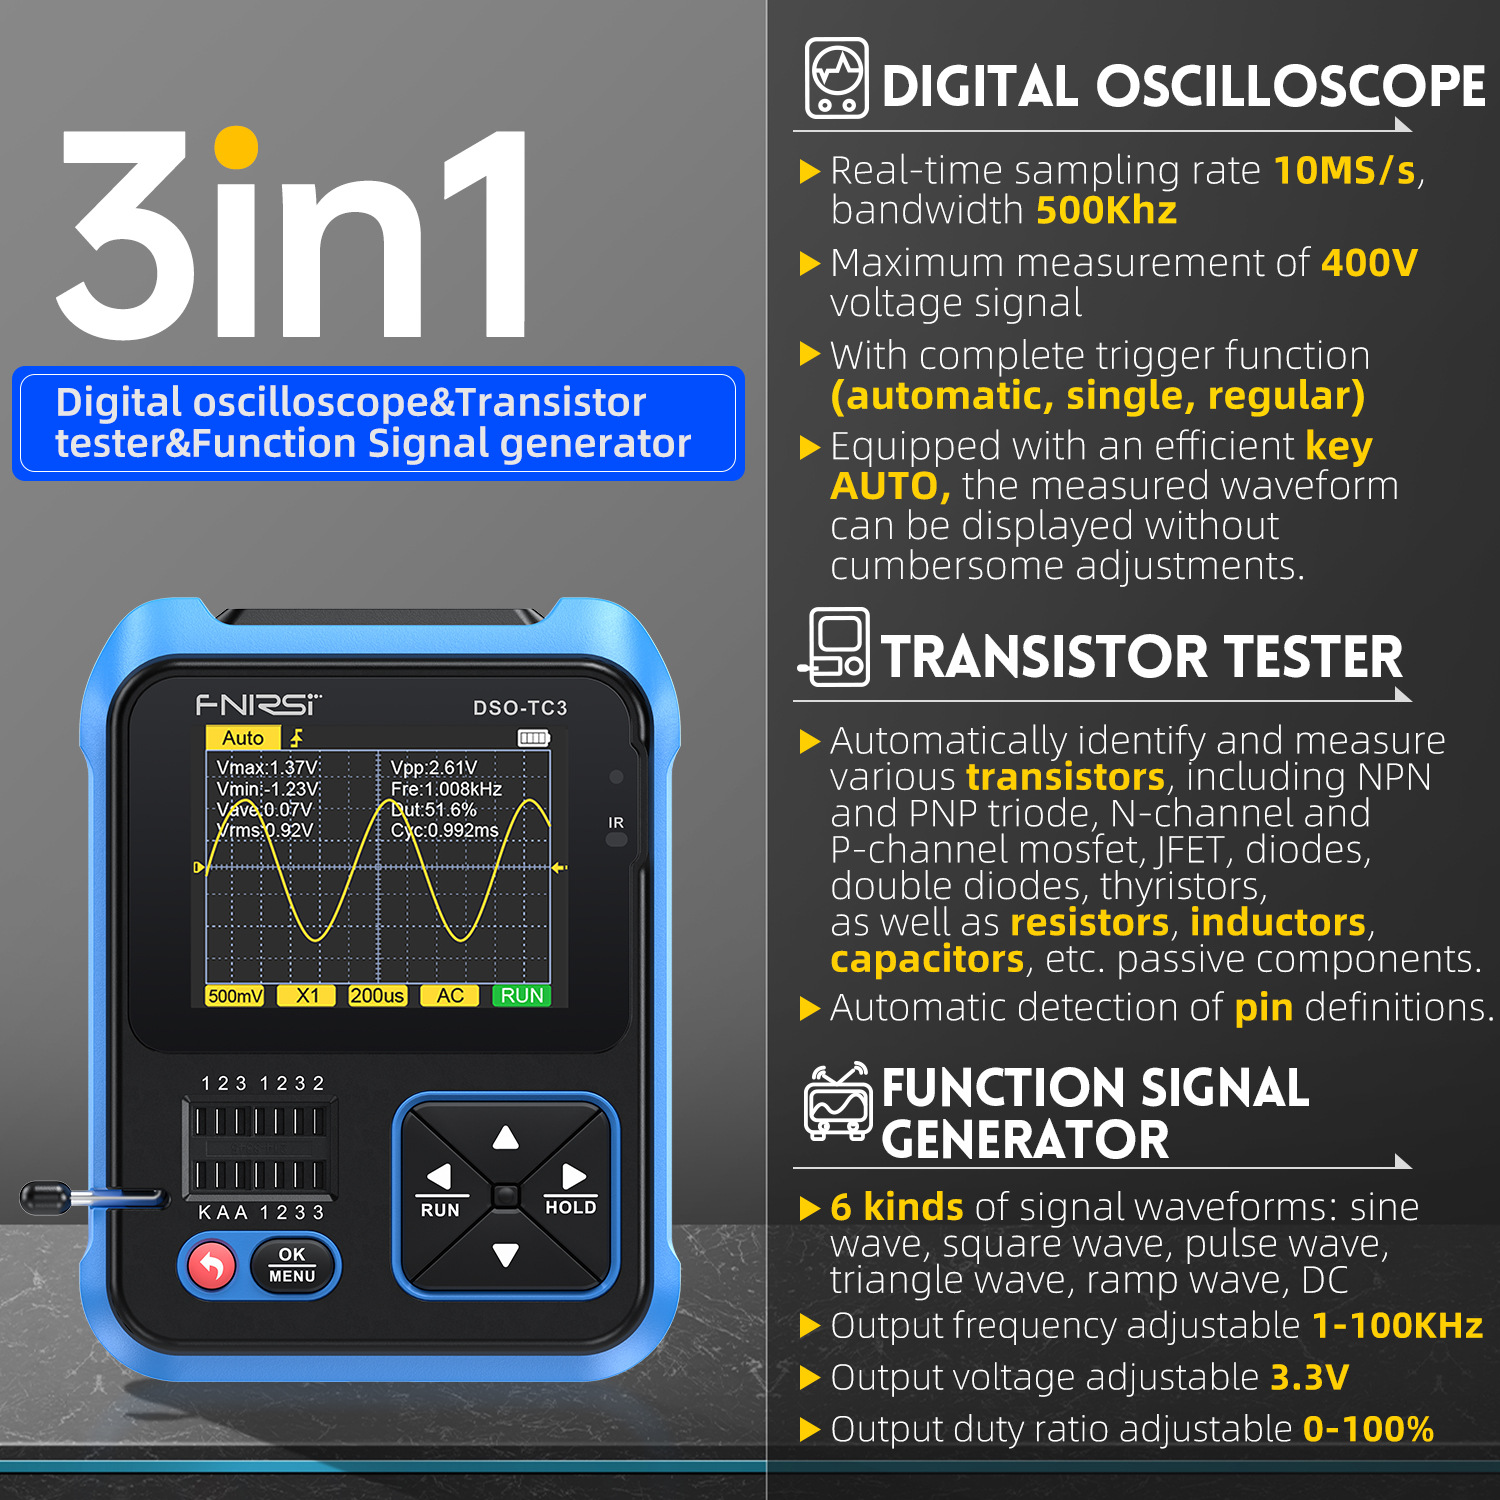 Digital WiFi Water Quality Tester 3-in-1 Multifunction Smart